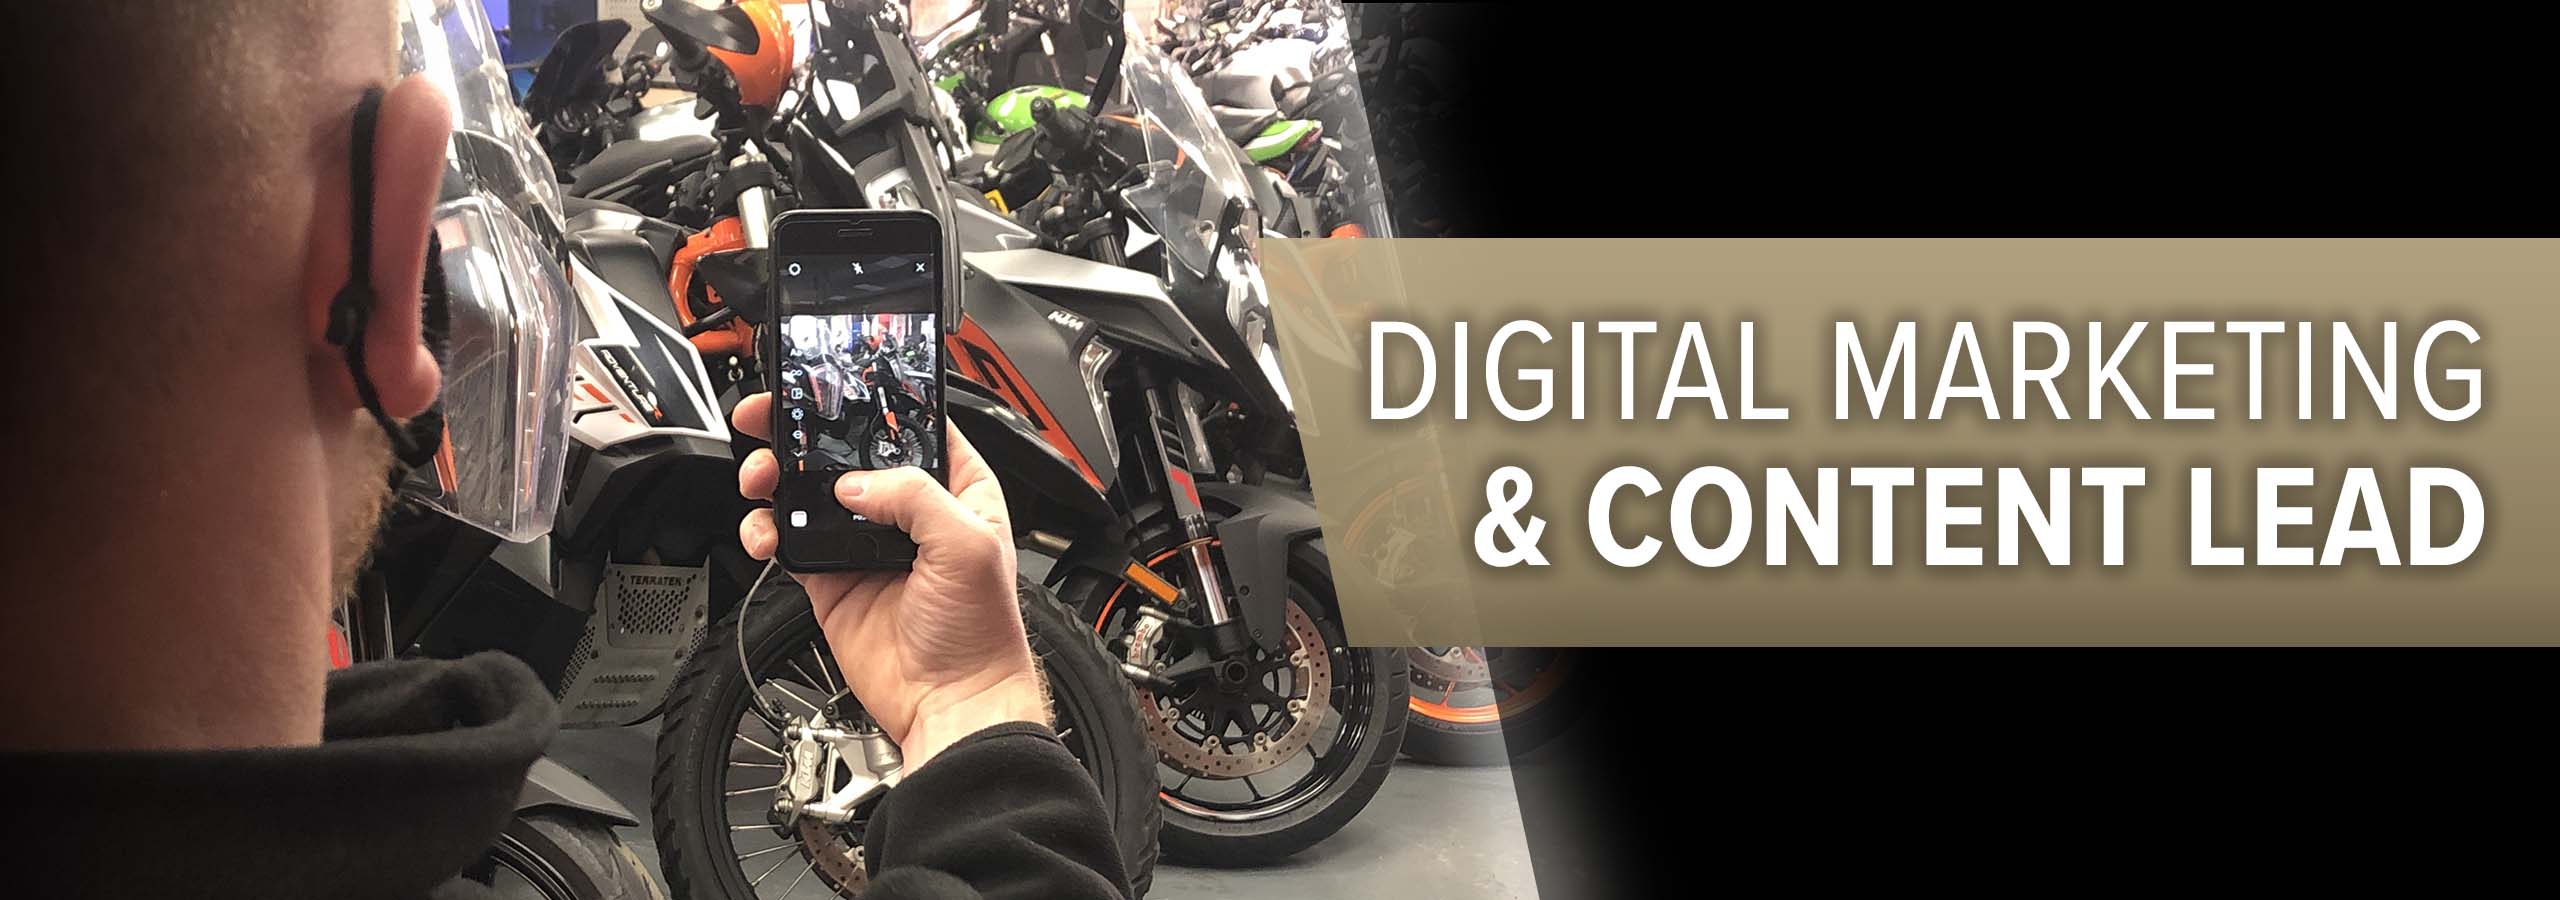 Laguna Motorcycles Digital Marketing & Content Lead Job Vacancy